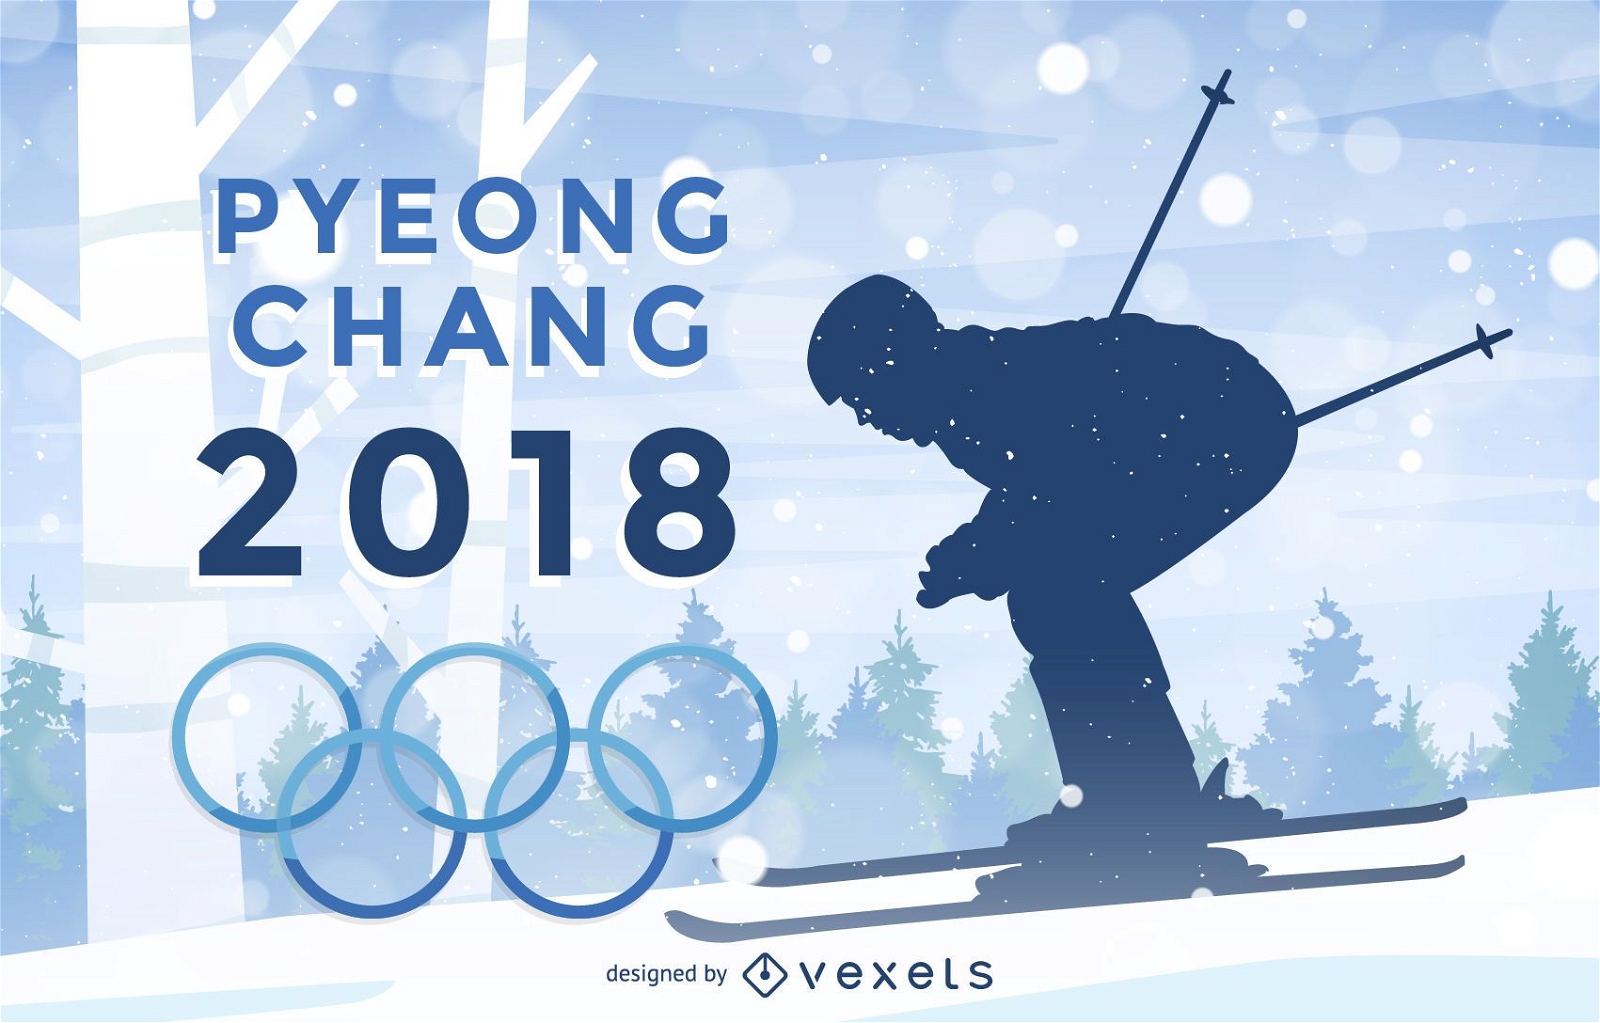 Pyeongchang 2018 Winter Olympics poster